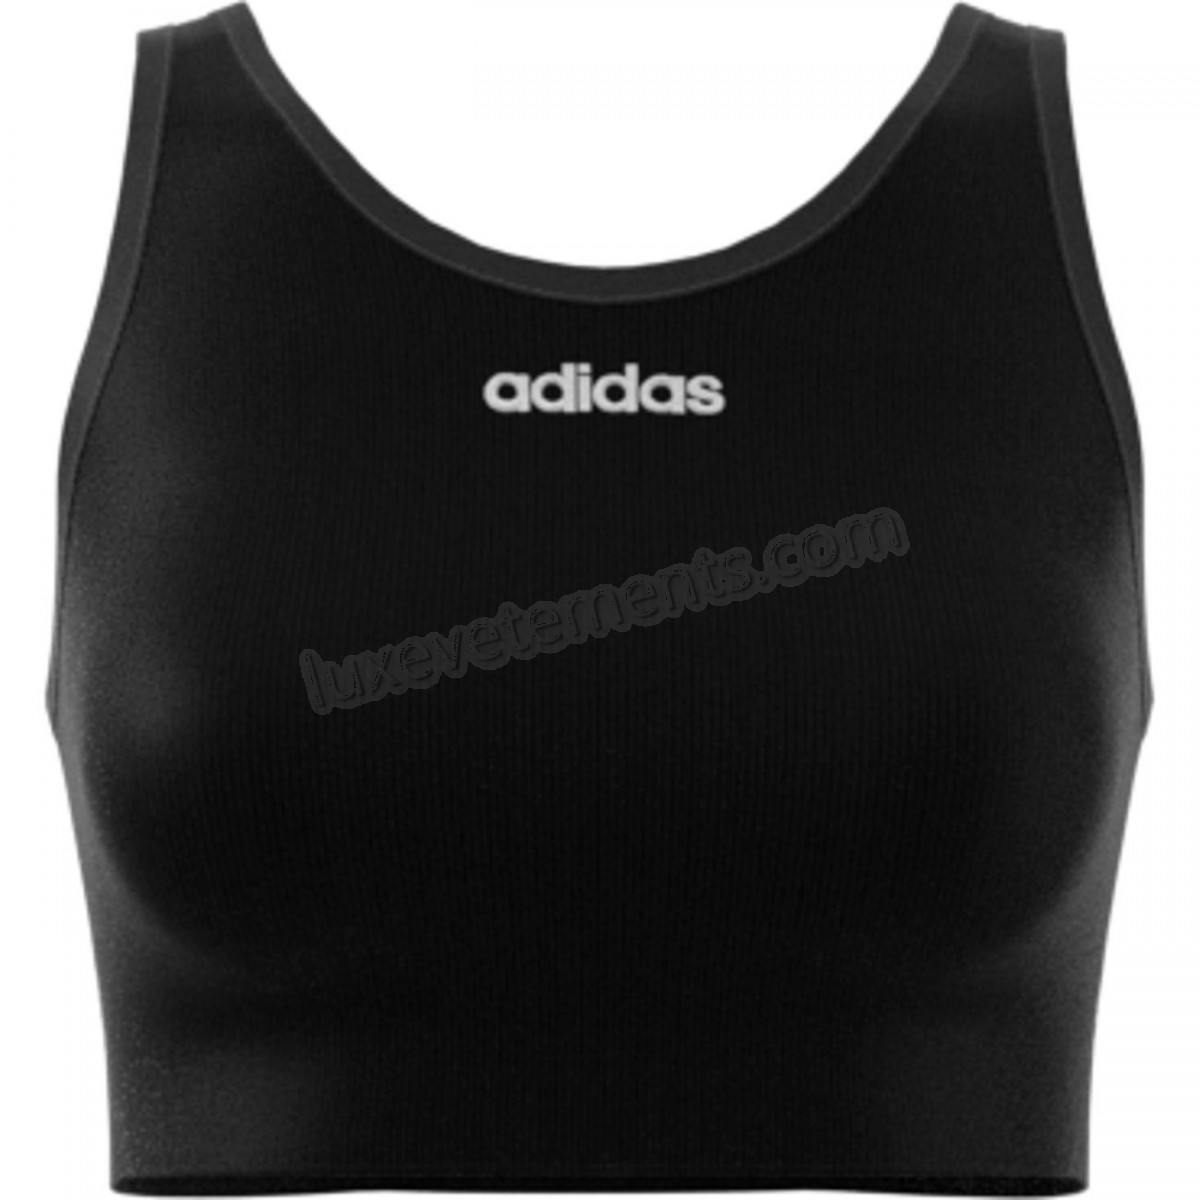 Adidas-Fitness femme ADIDAS Brassière adidas Core Training Vente en ligne - -10